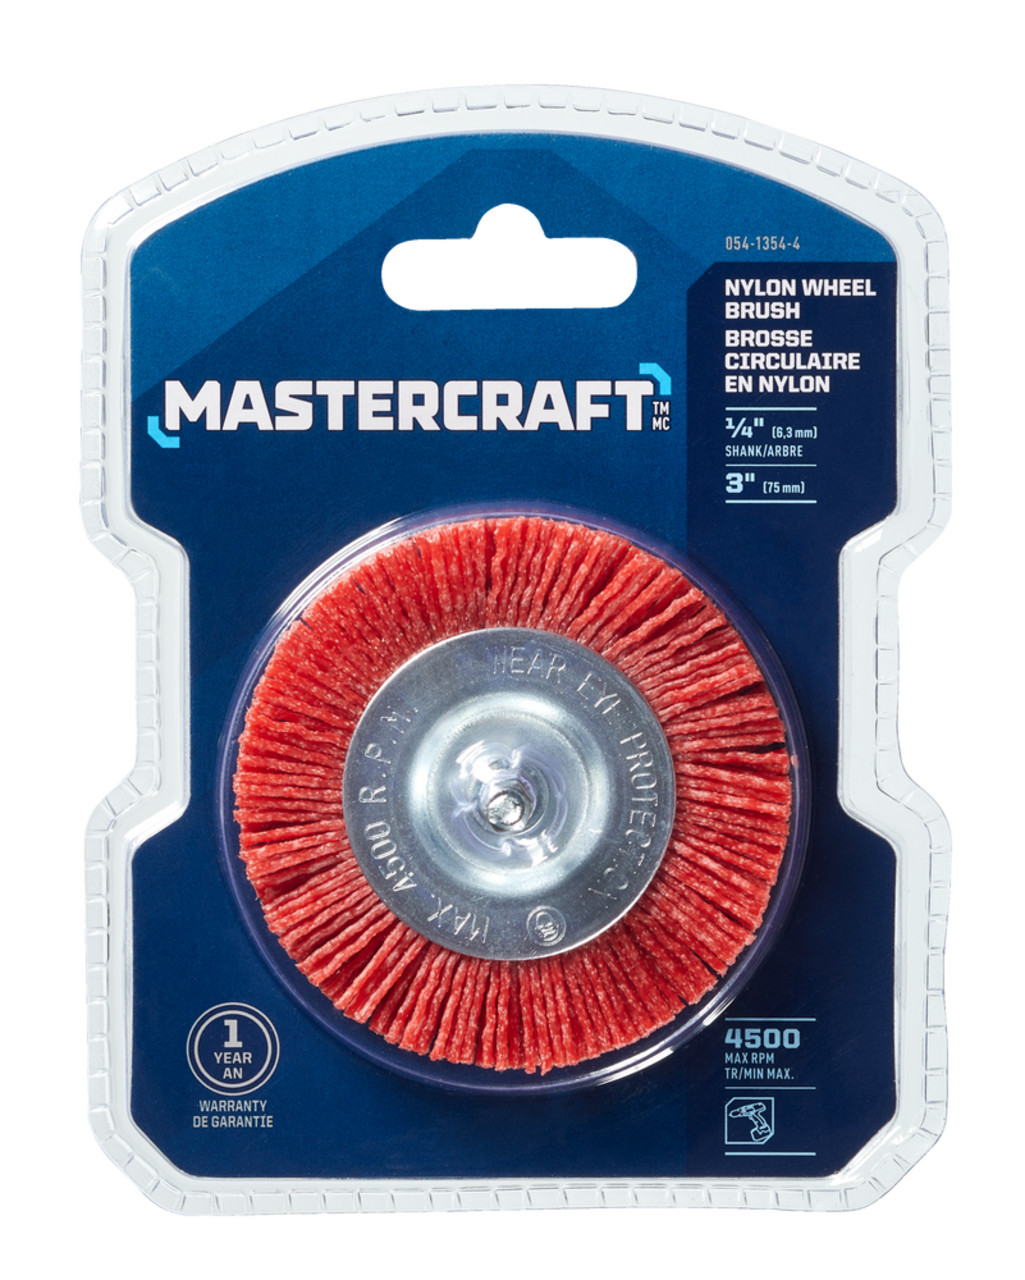 Mastercraft Buffing and Polishing Kit, 7-pcs